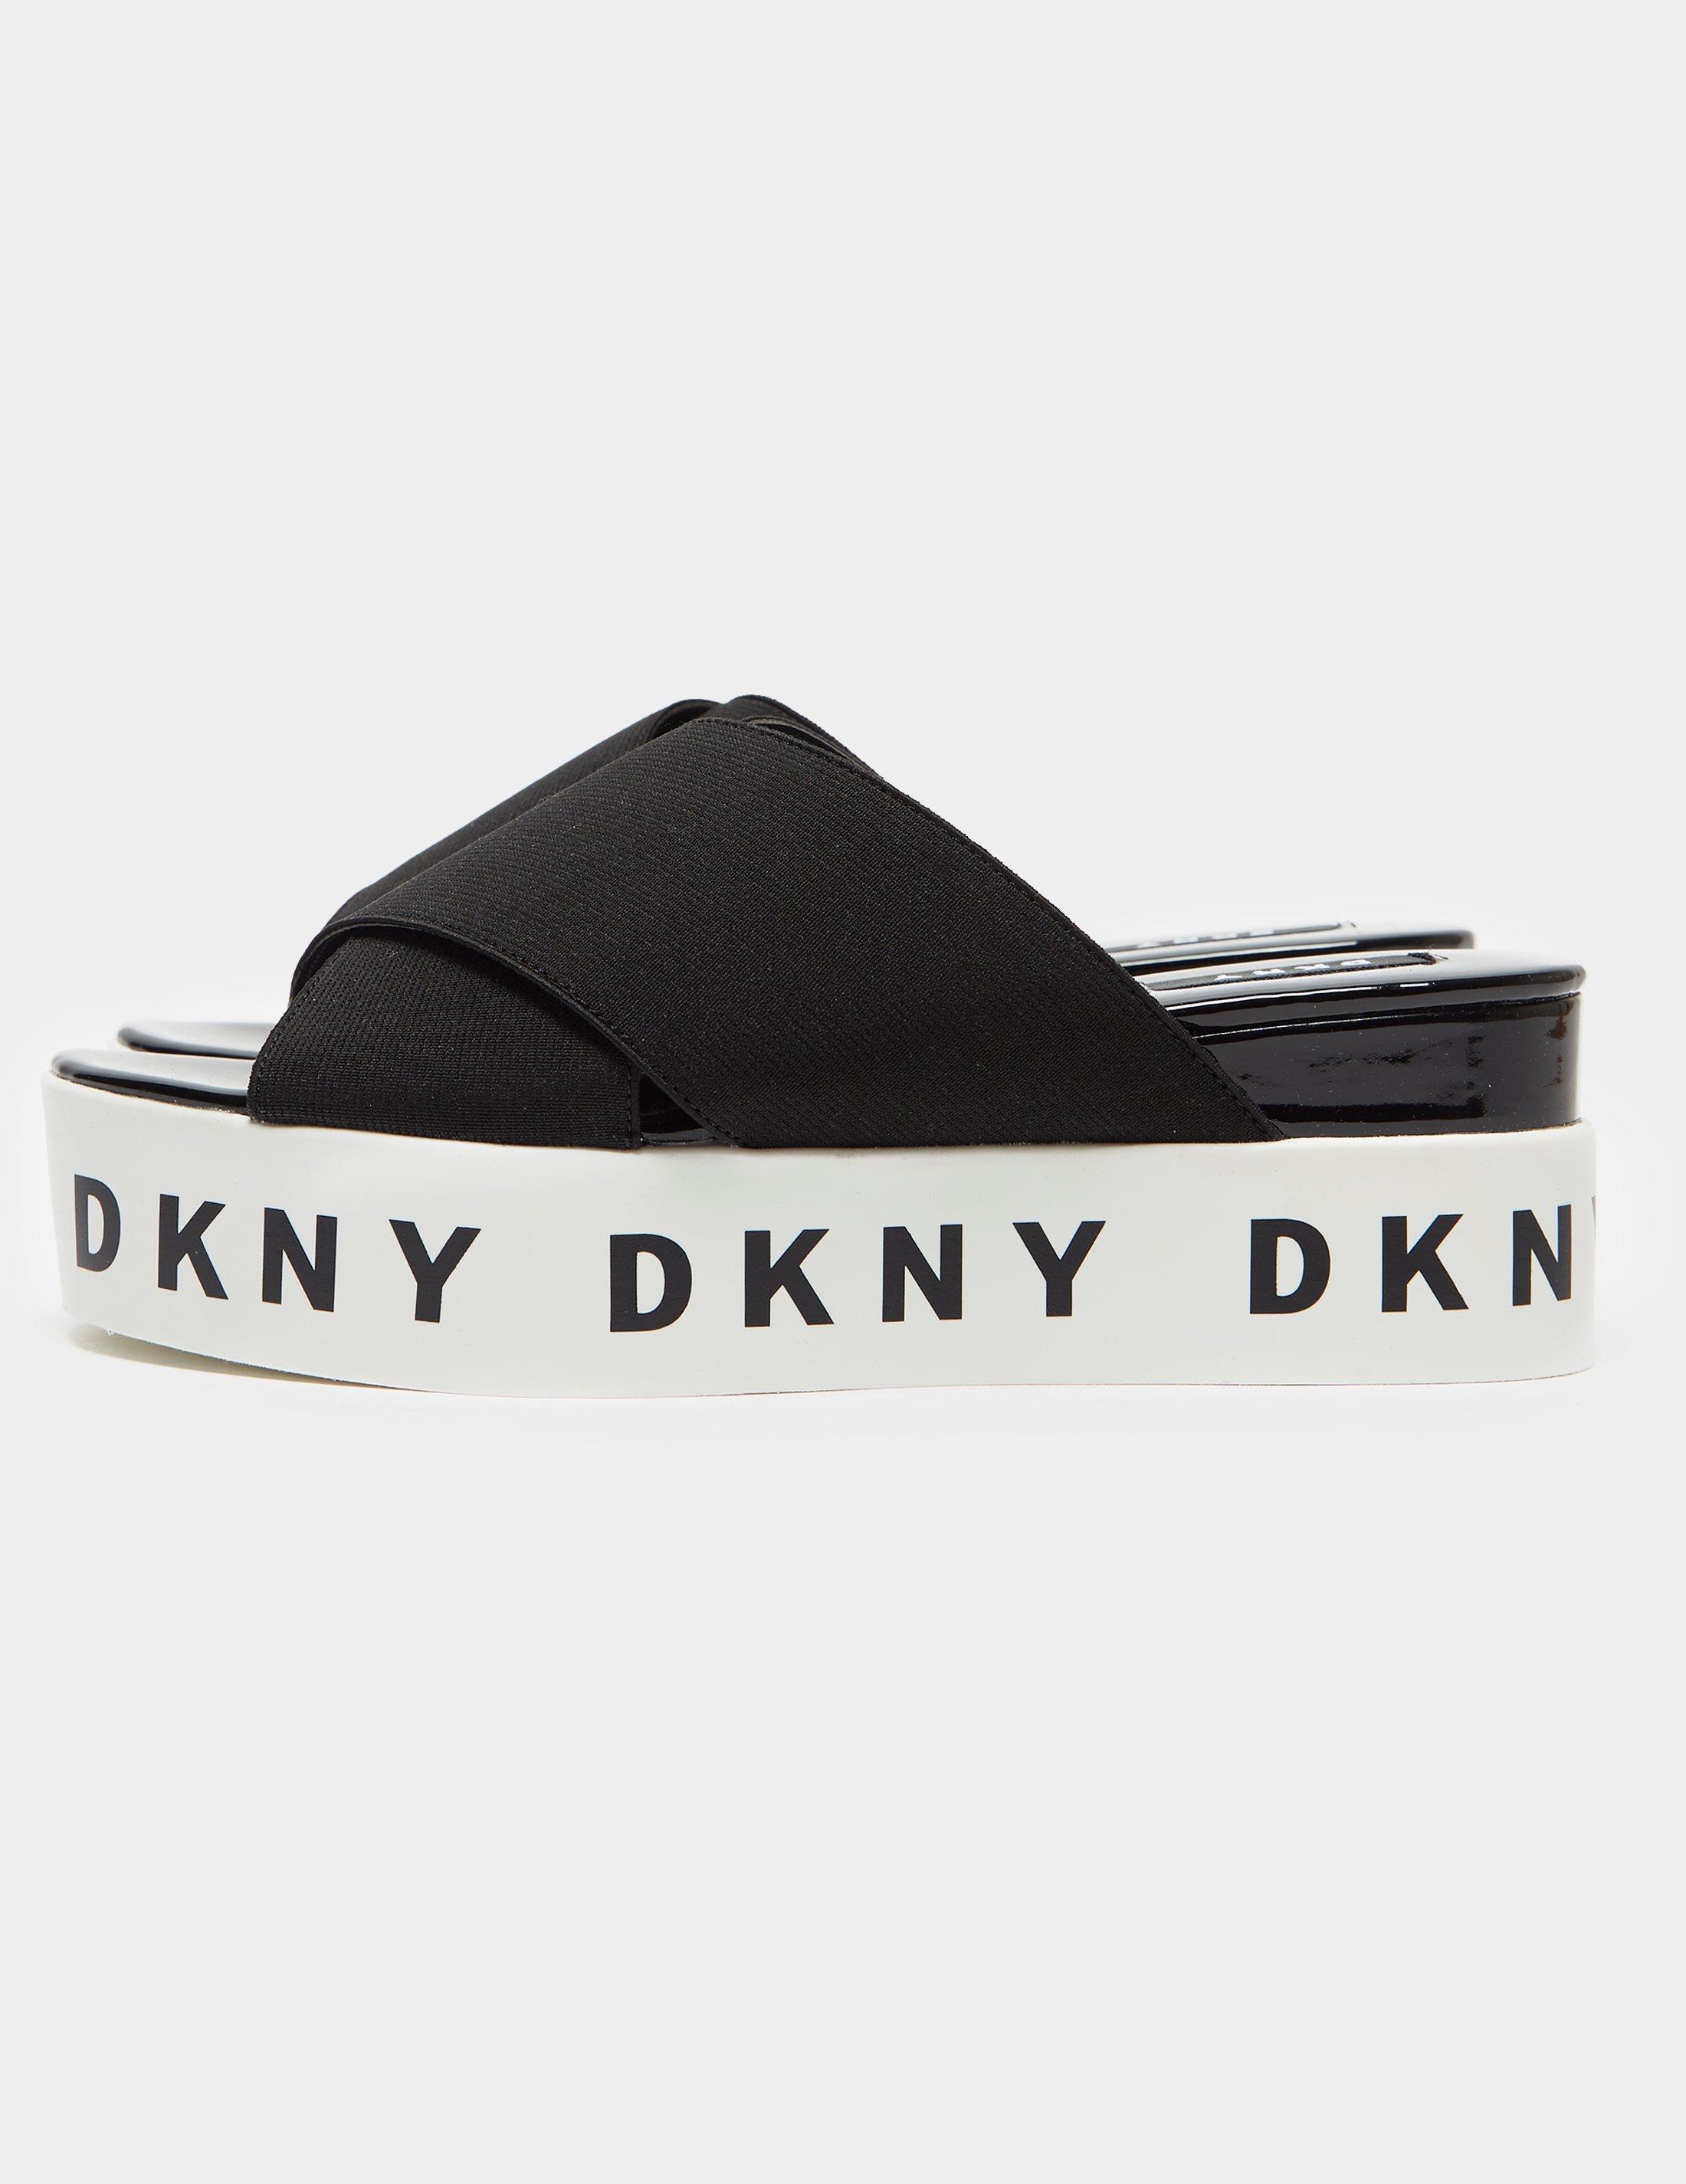 DK2021 Col Black & Beige size S,M,L DKNY Skyline Brief 